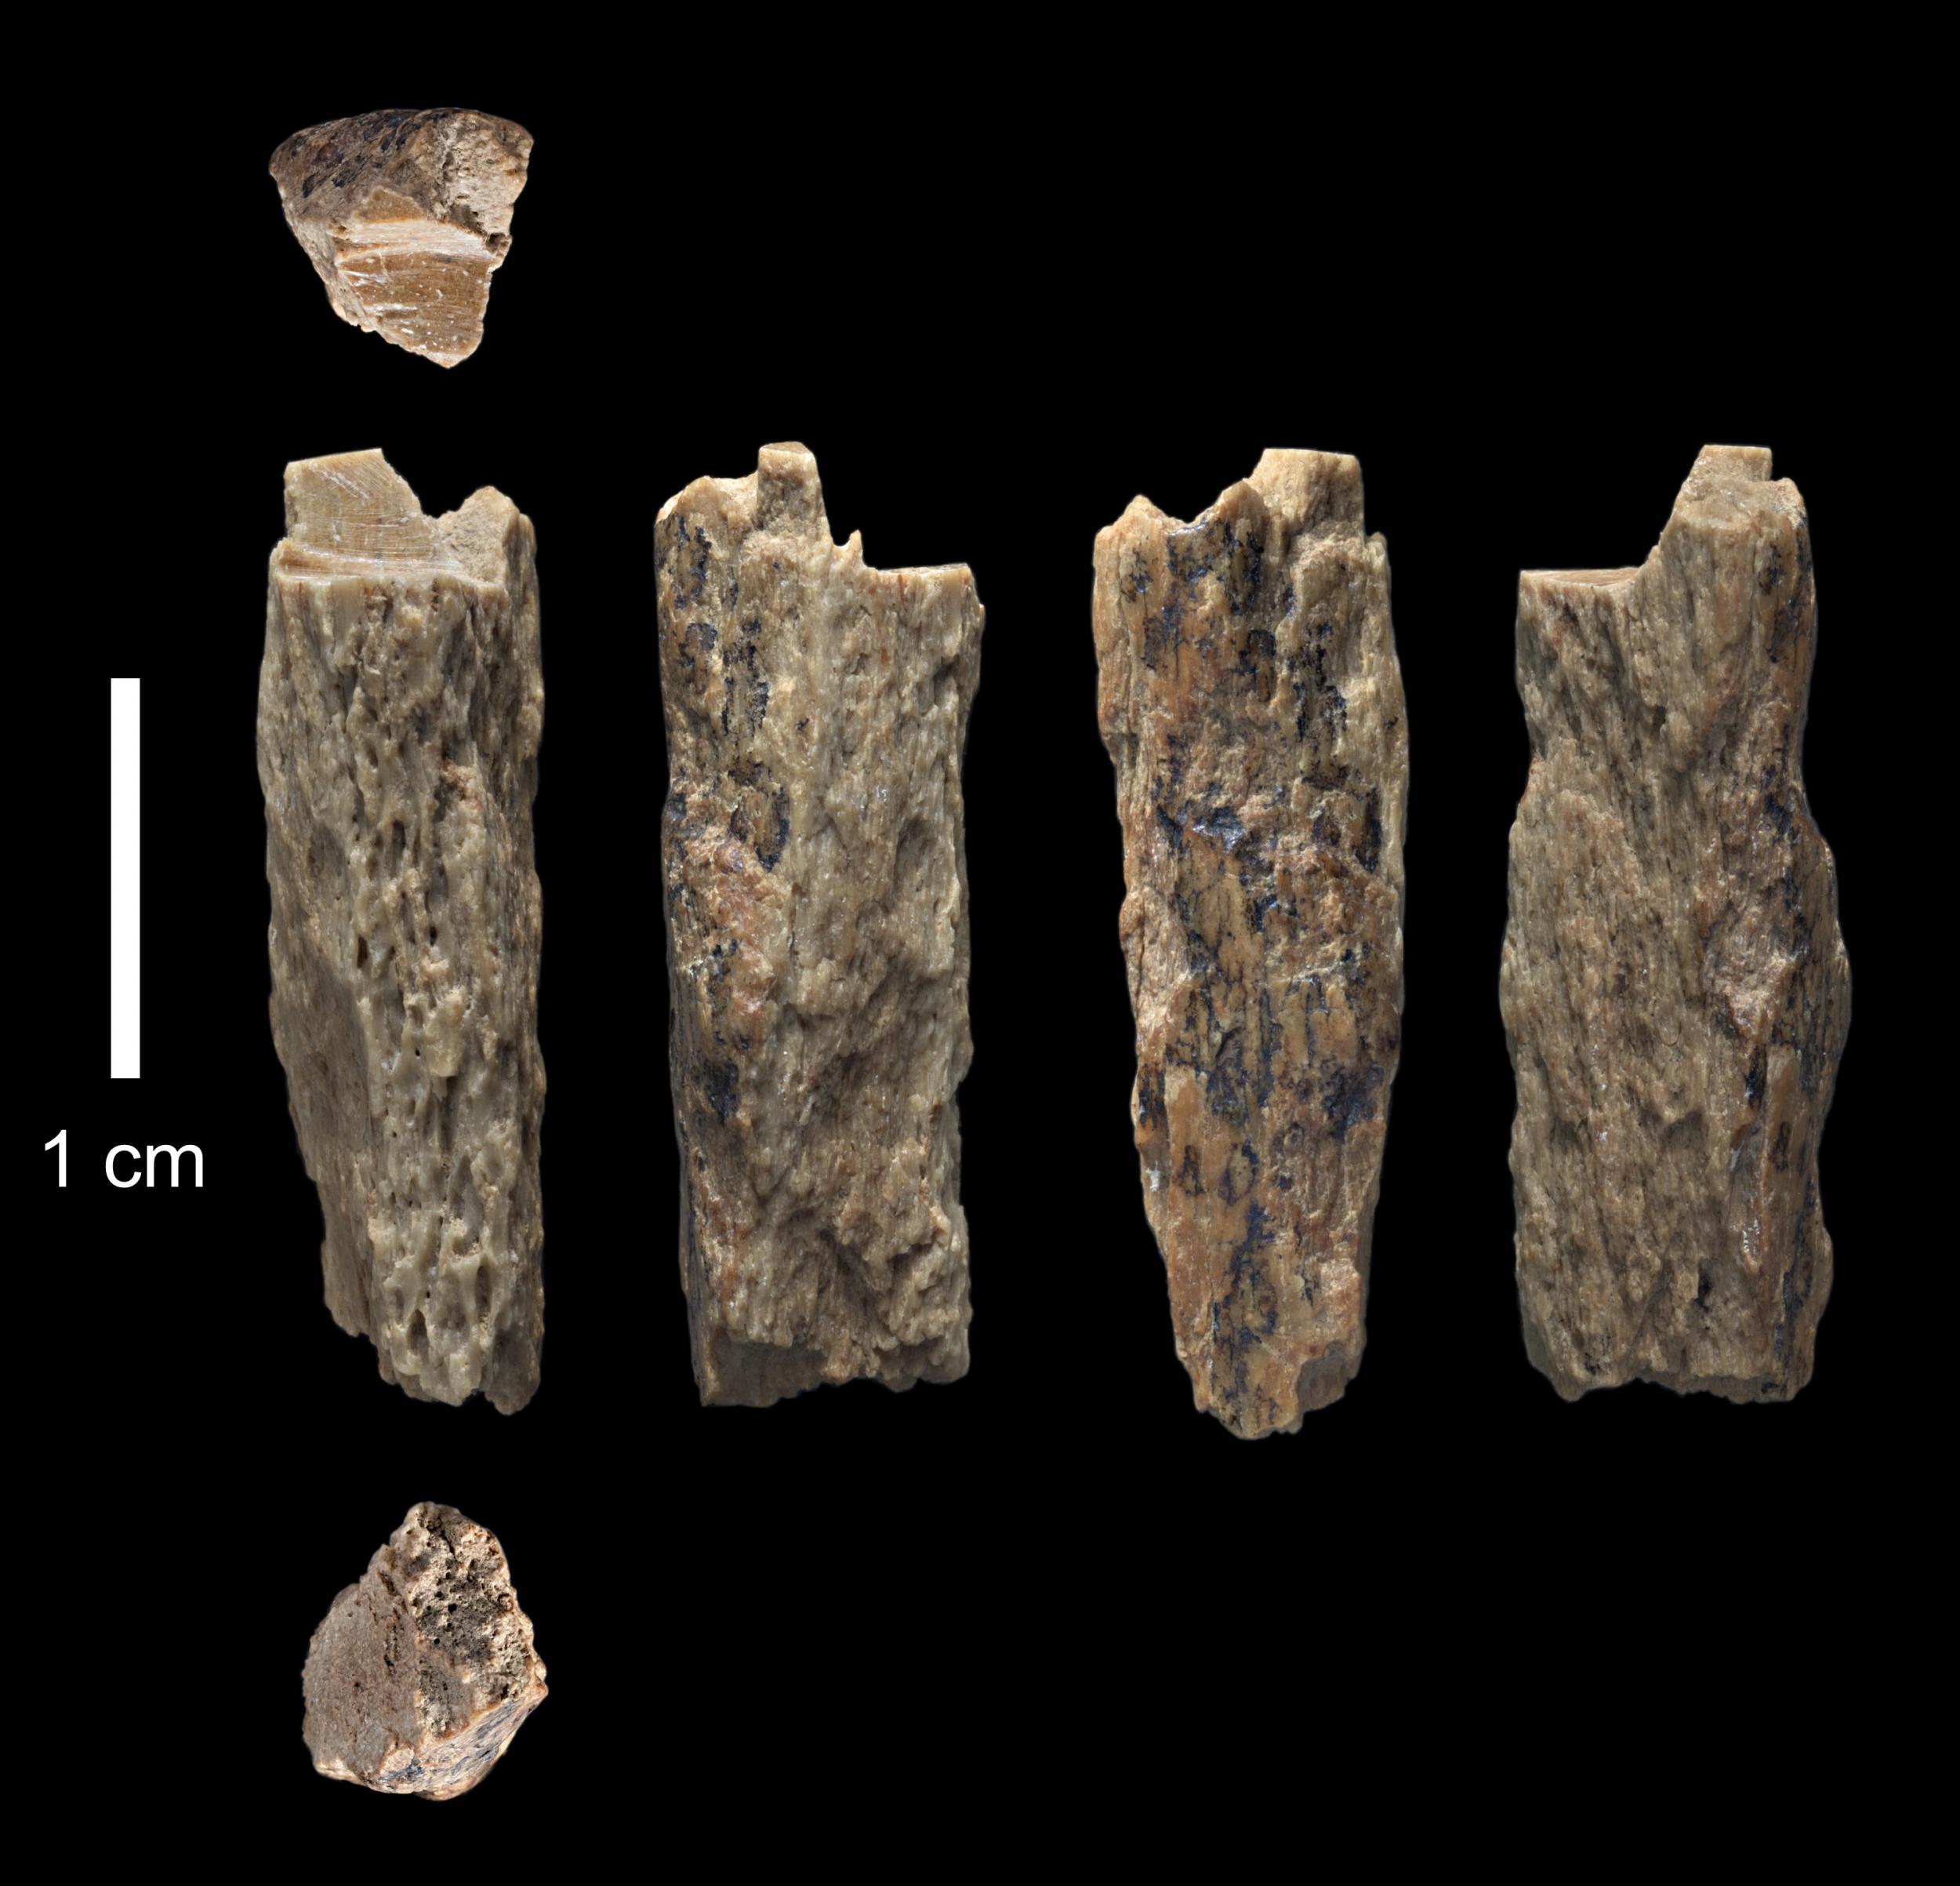 The bone fragment 'Denisova 11' from several angles